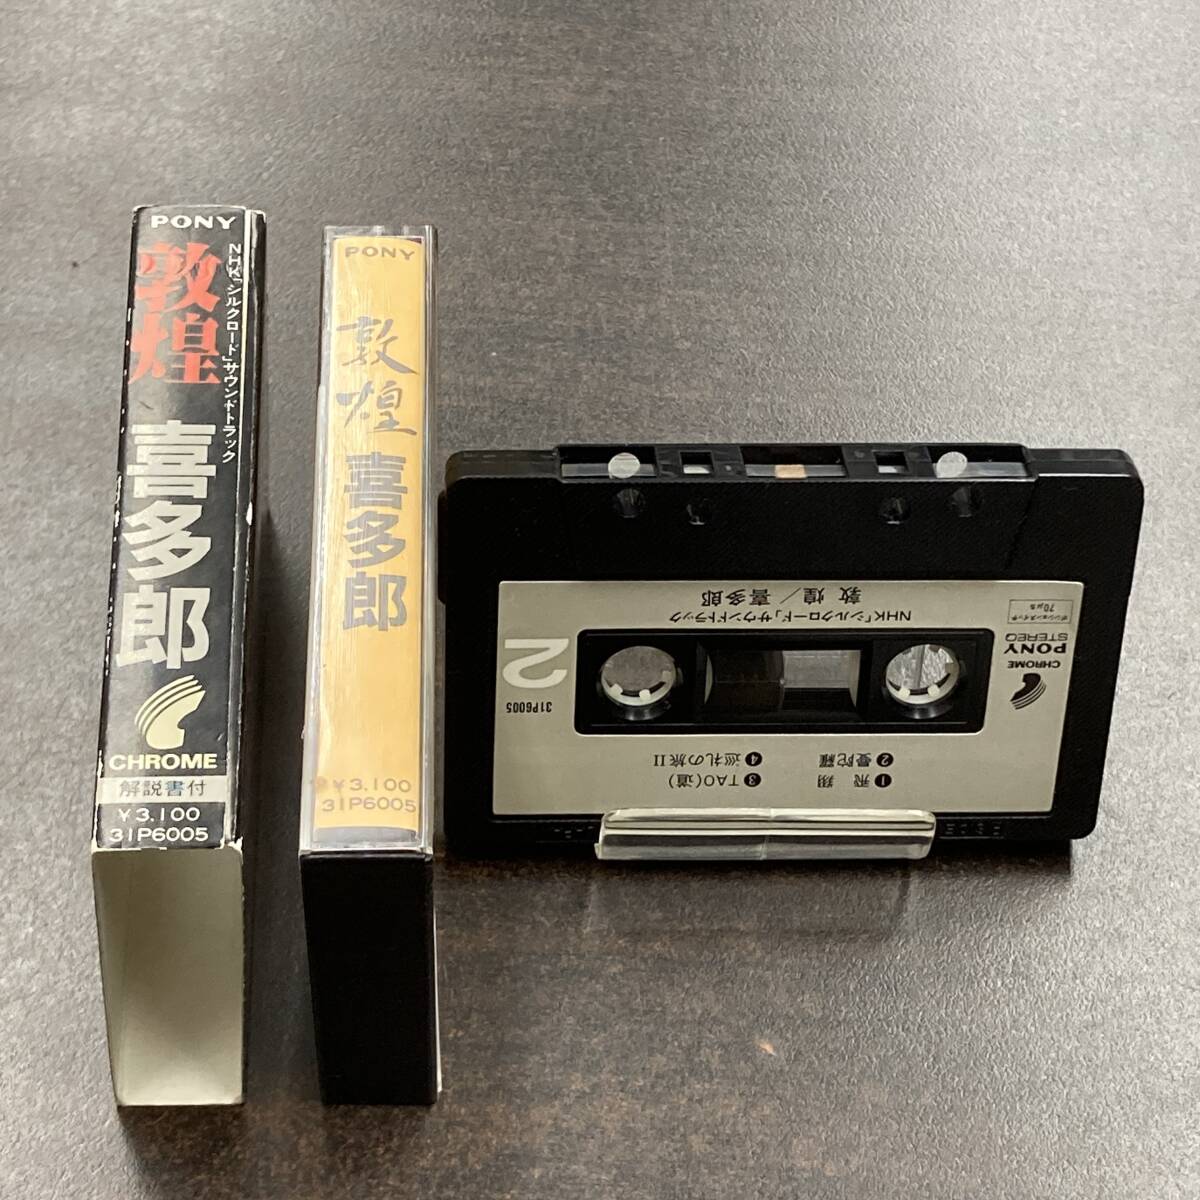 1066M 喜多郎 敦煌 カセットテープ / KITARO Soundtrack Cassette Tape_画像3